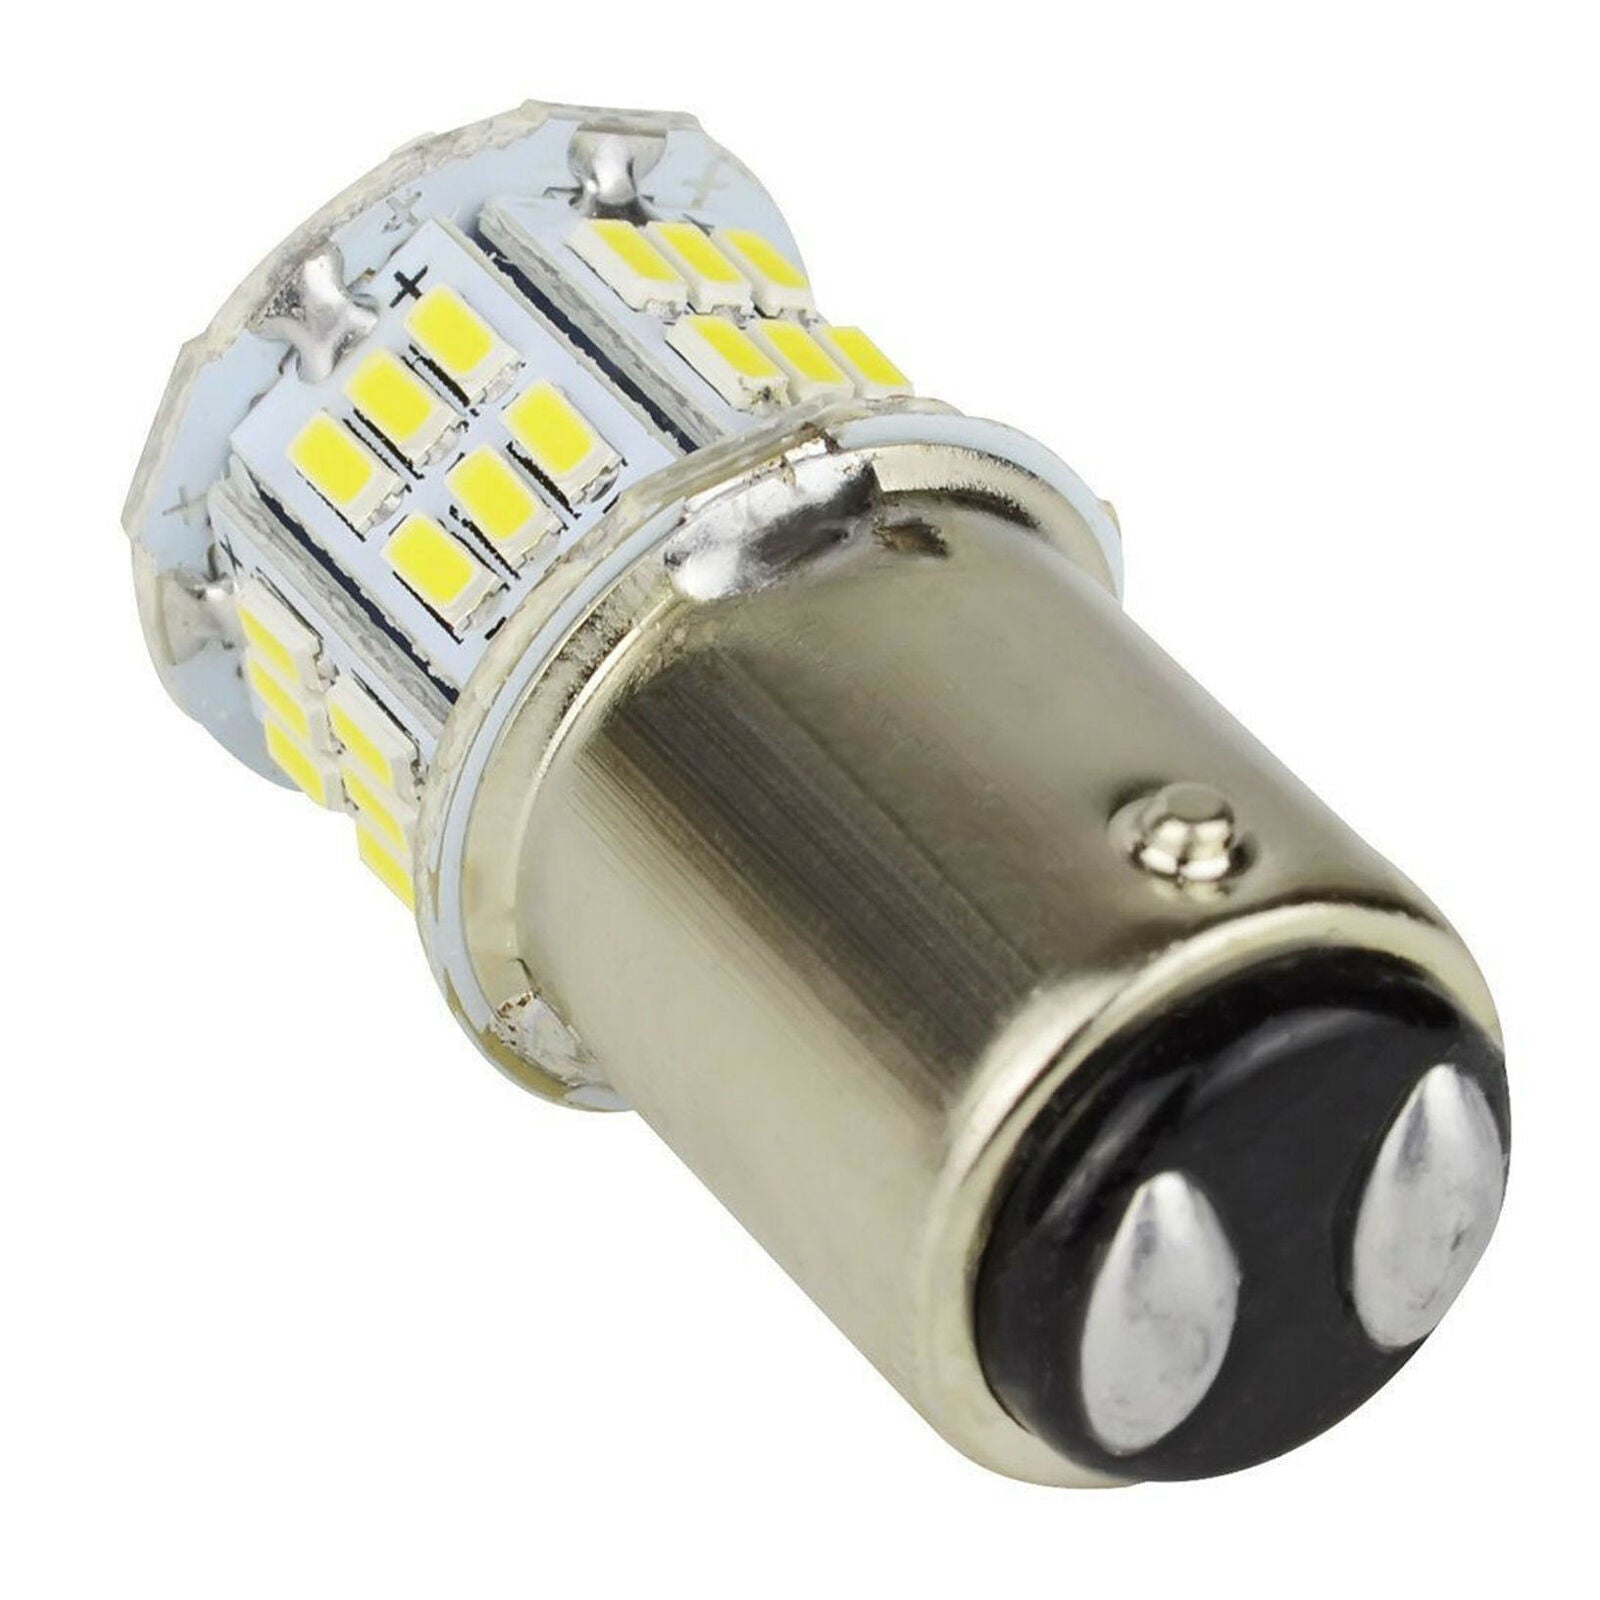 Safego 2x 54 SMD 3014 Lamp 1157 BAY15D LED Bulb 6000K 12V Car Reverse Rear Turn